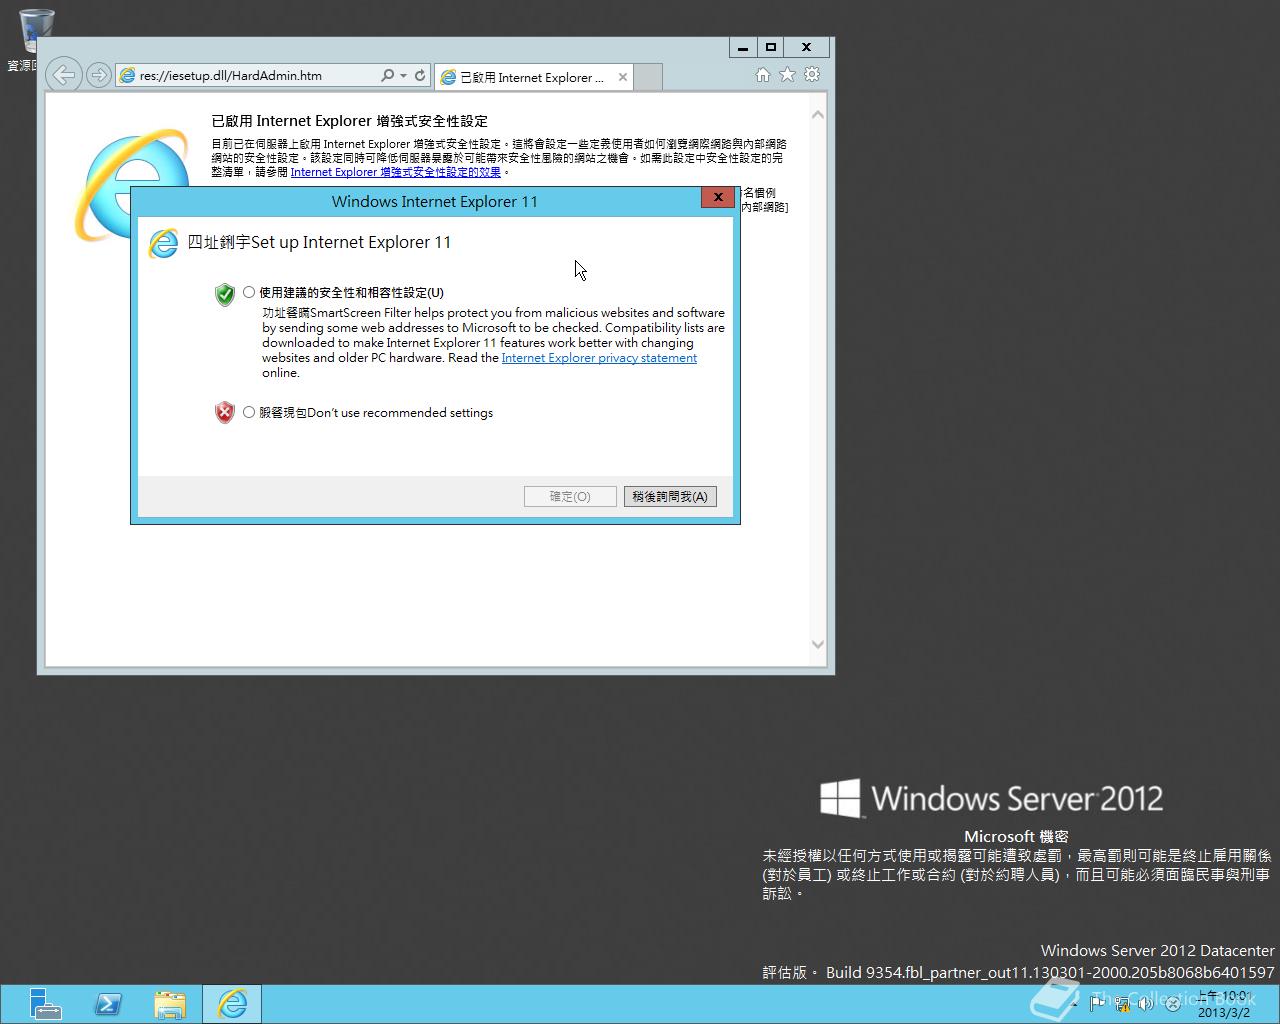 windows server 2012 r2 datacenter serial